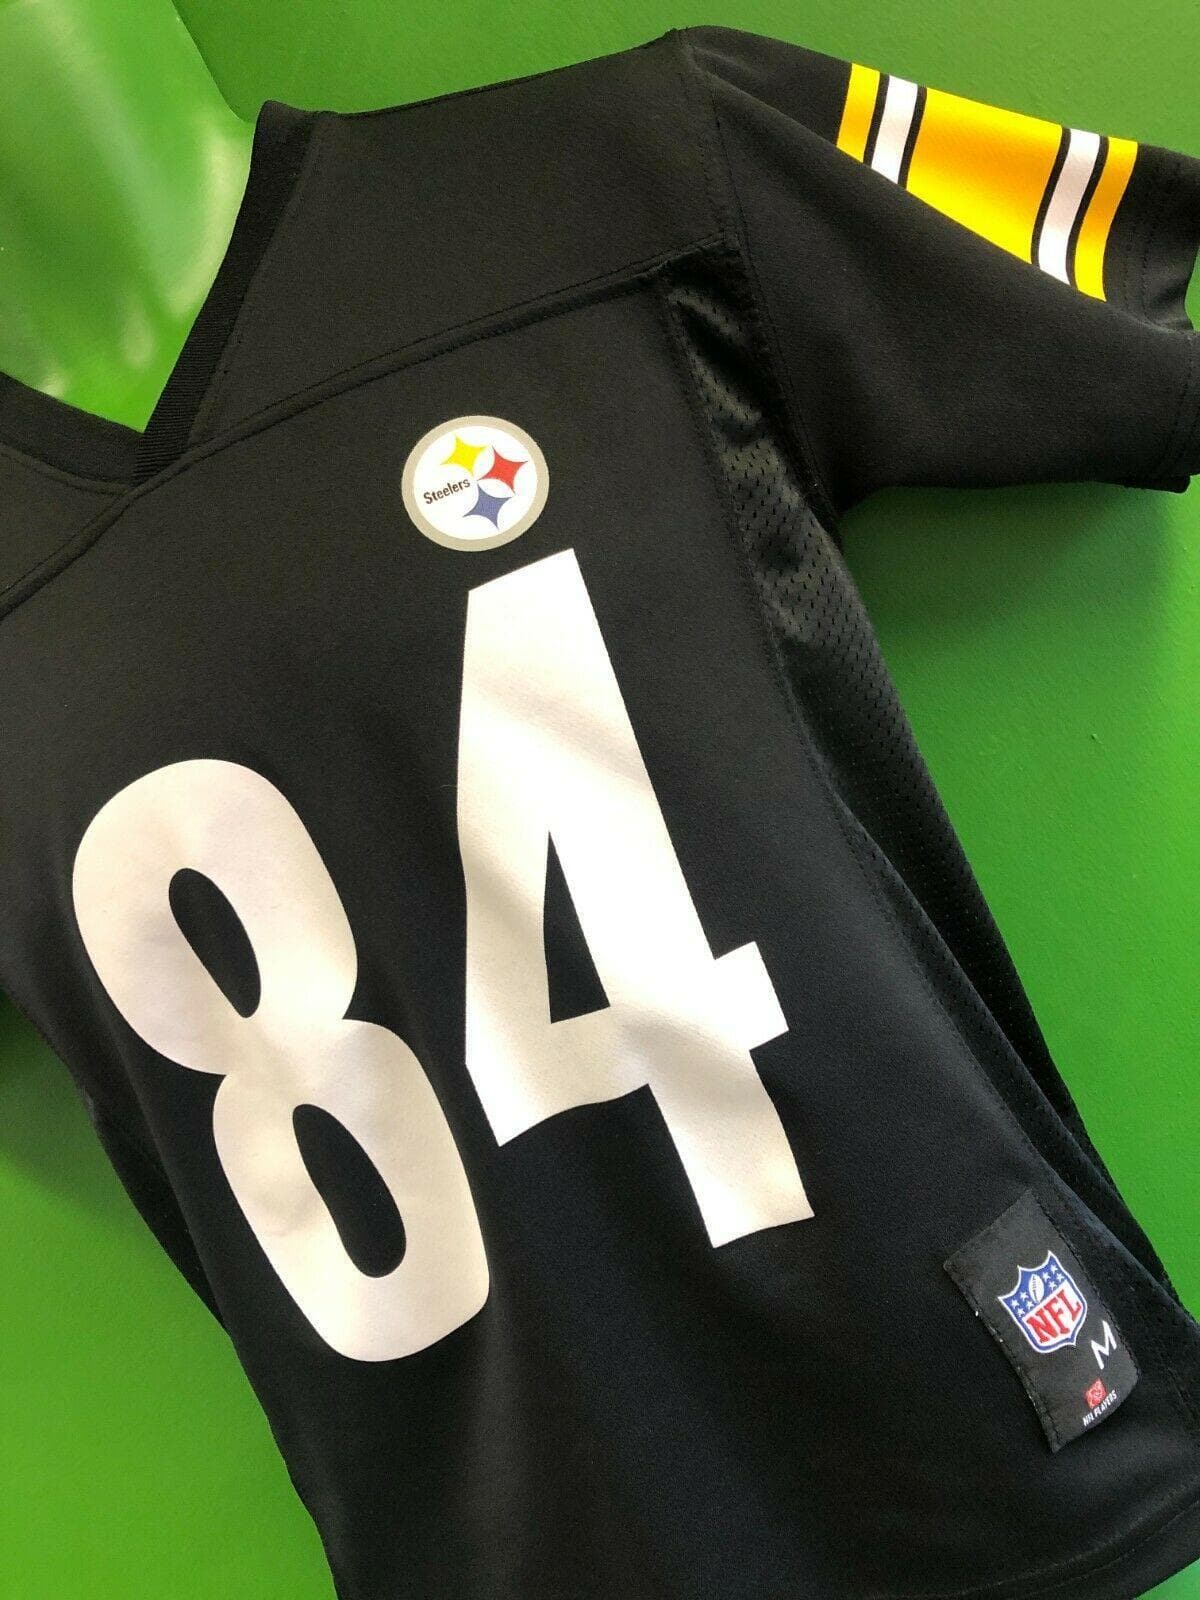 NFL Pittsburgh Steelers Antonio Brown #84 Jersey Youth Medium 10-12